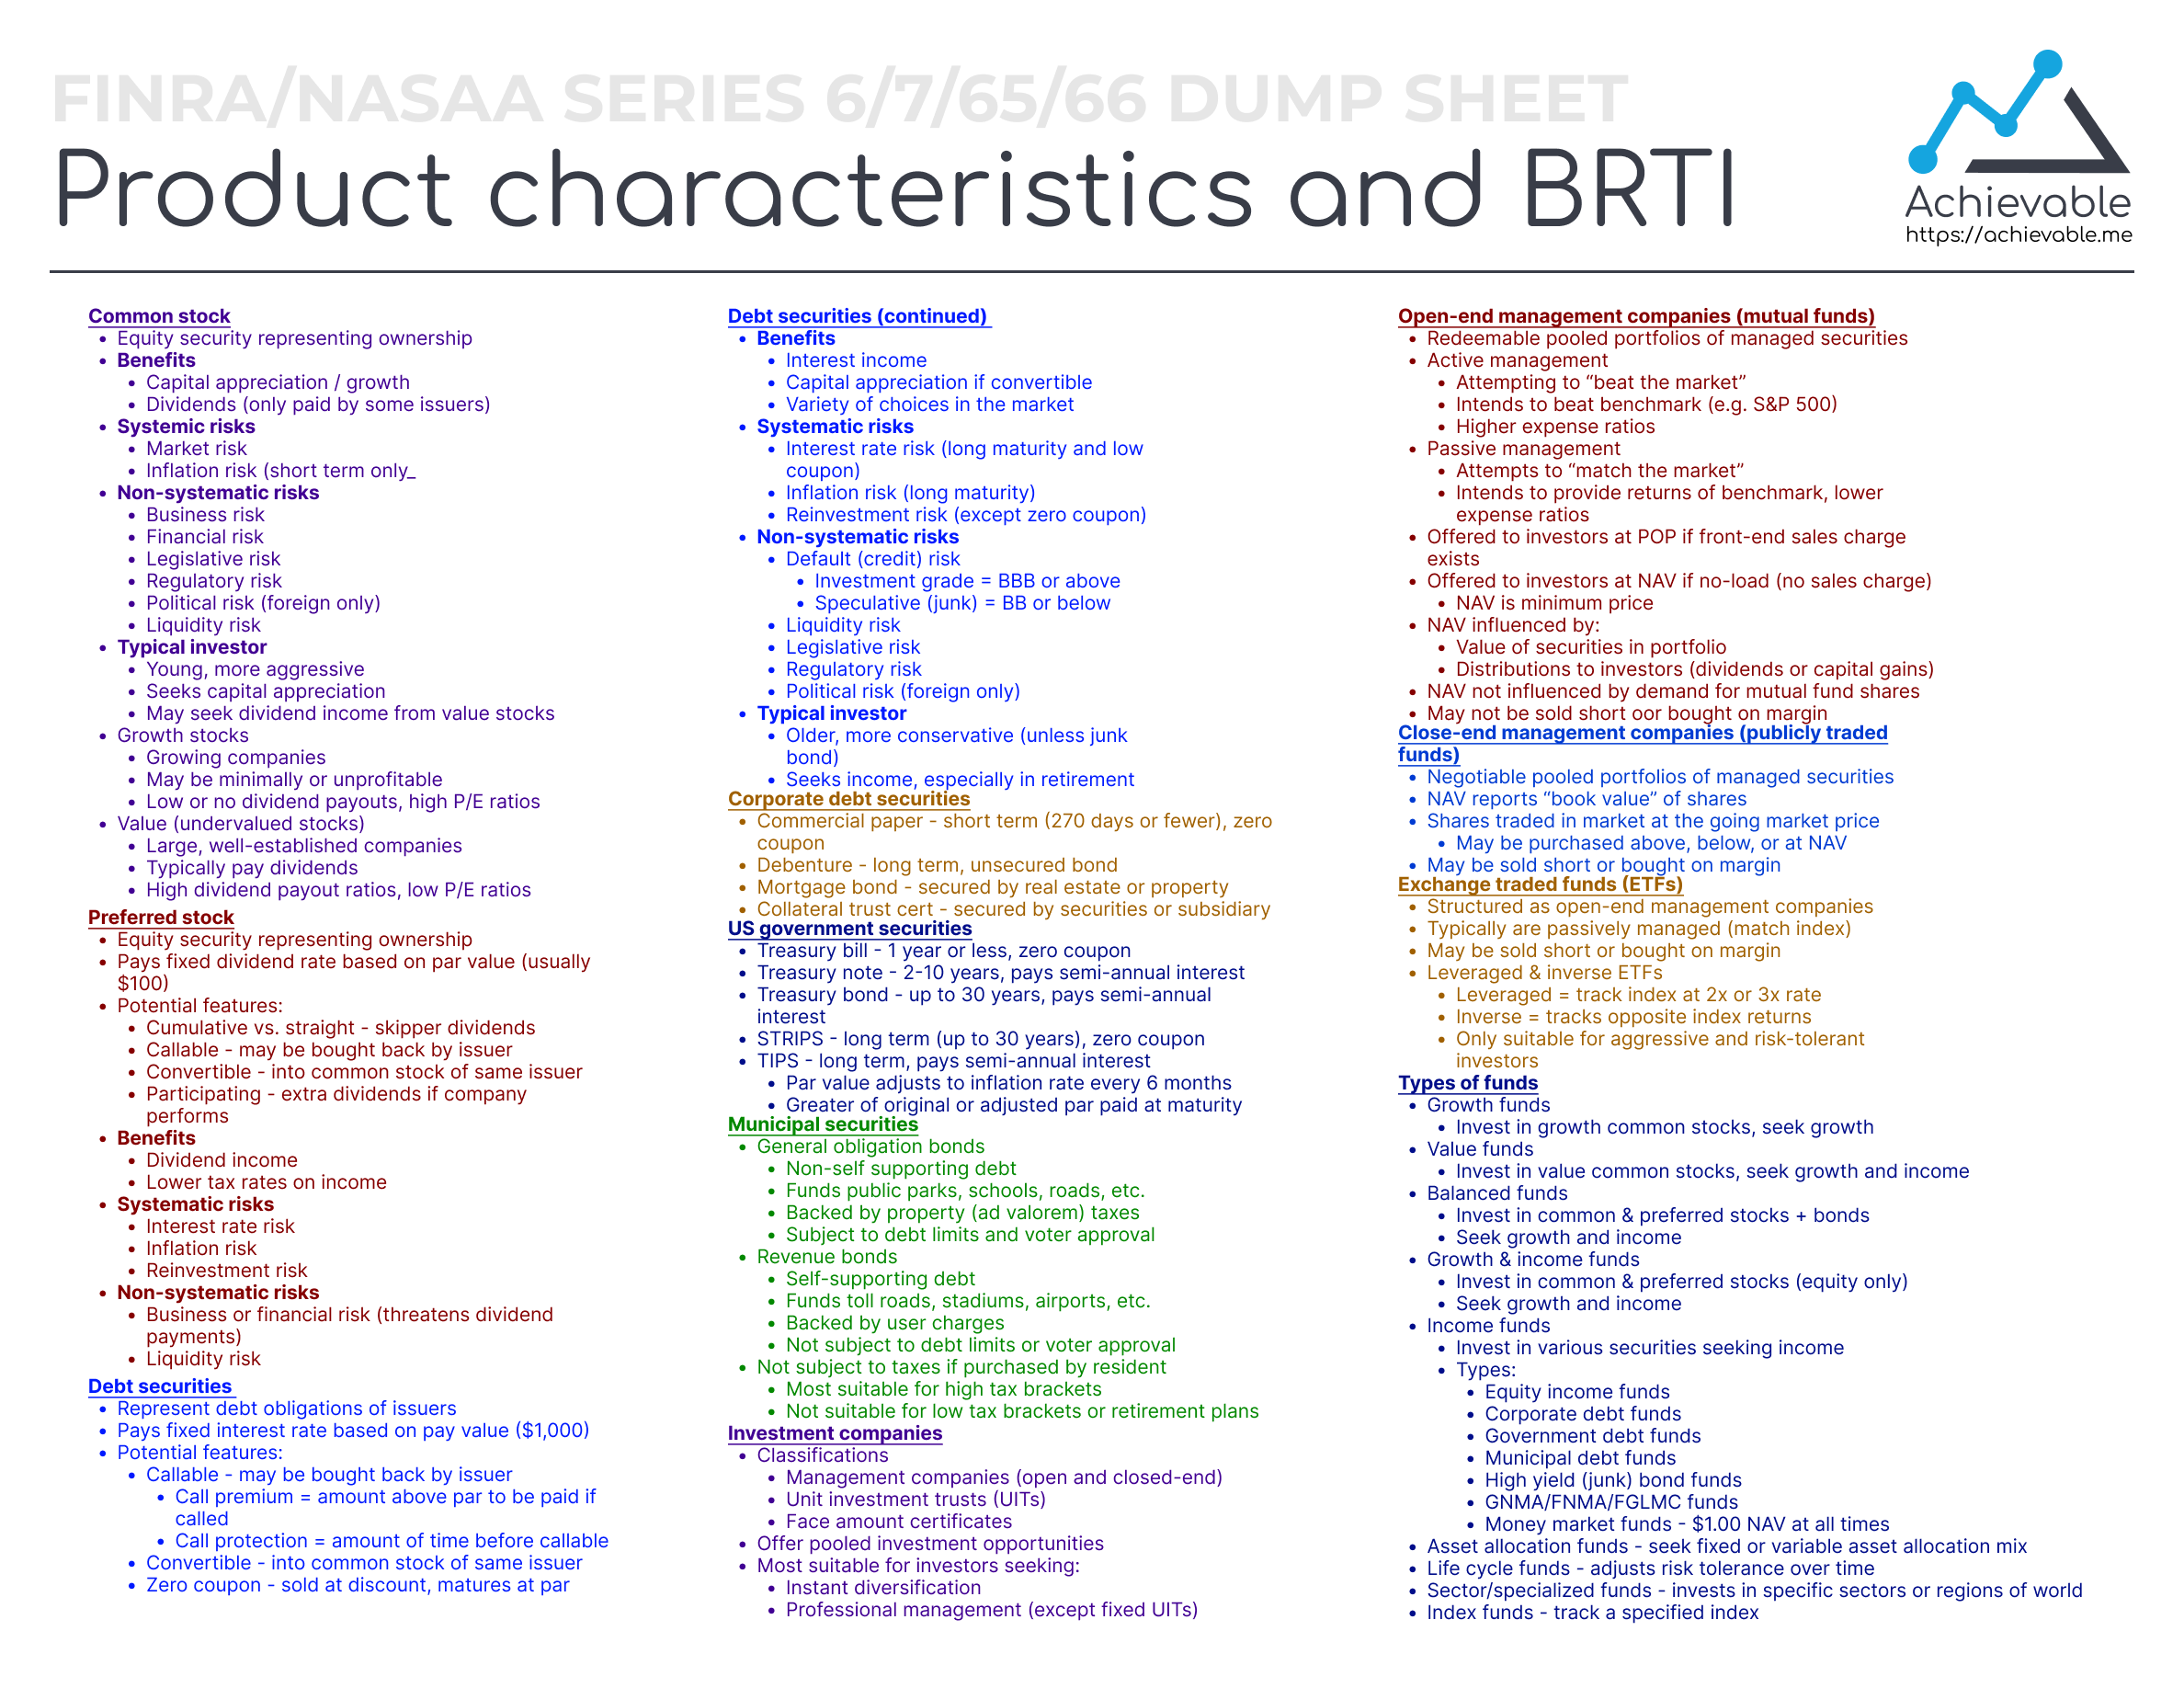 Series 7 Dump Sheet - Product Characteristics and BRTI